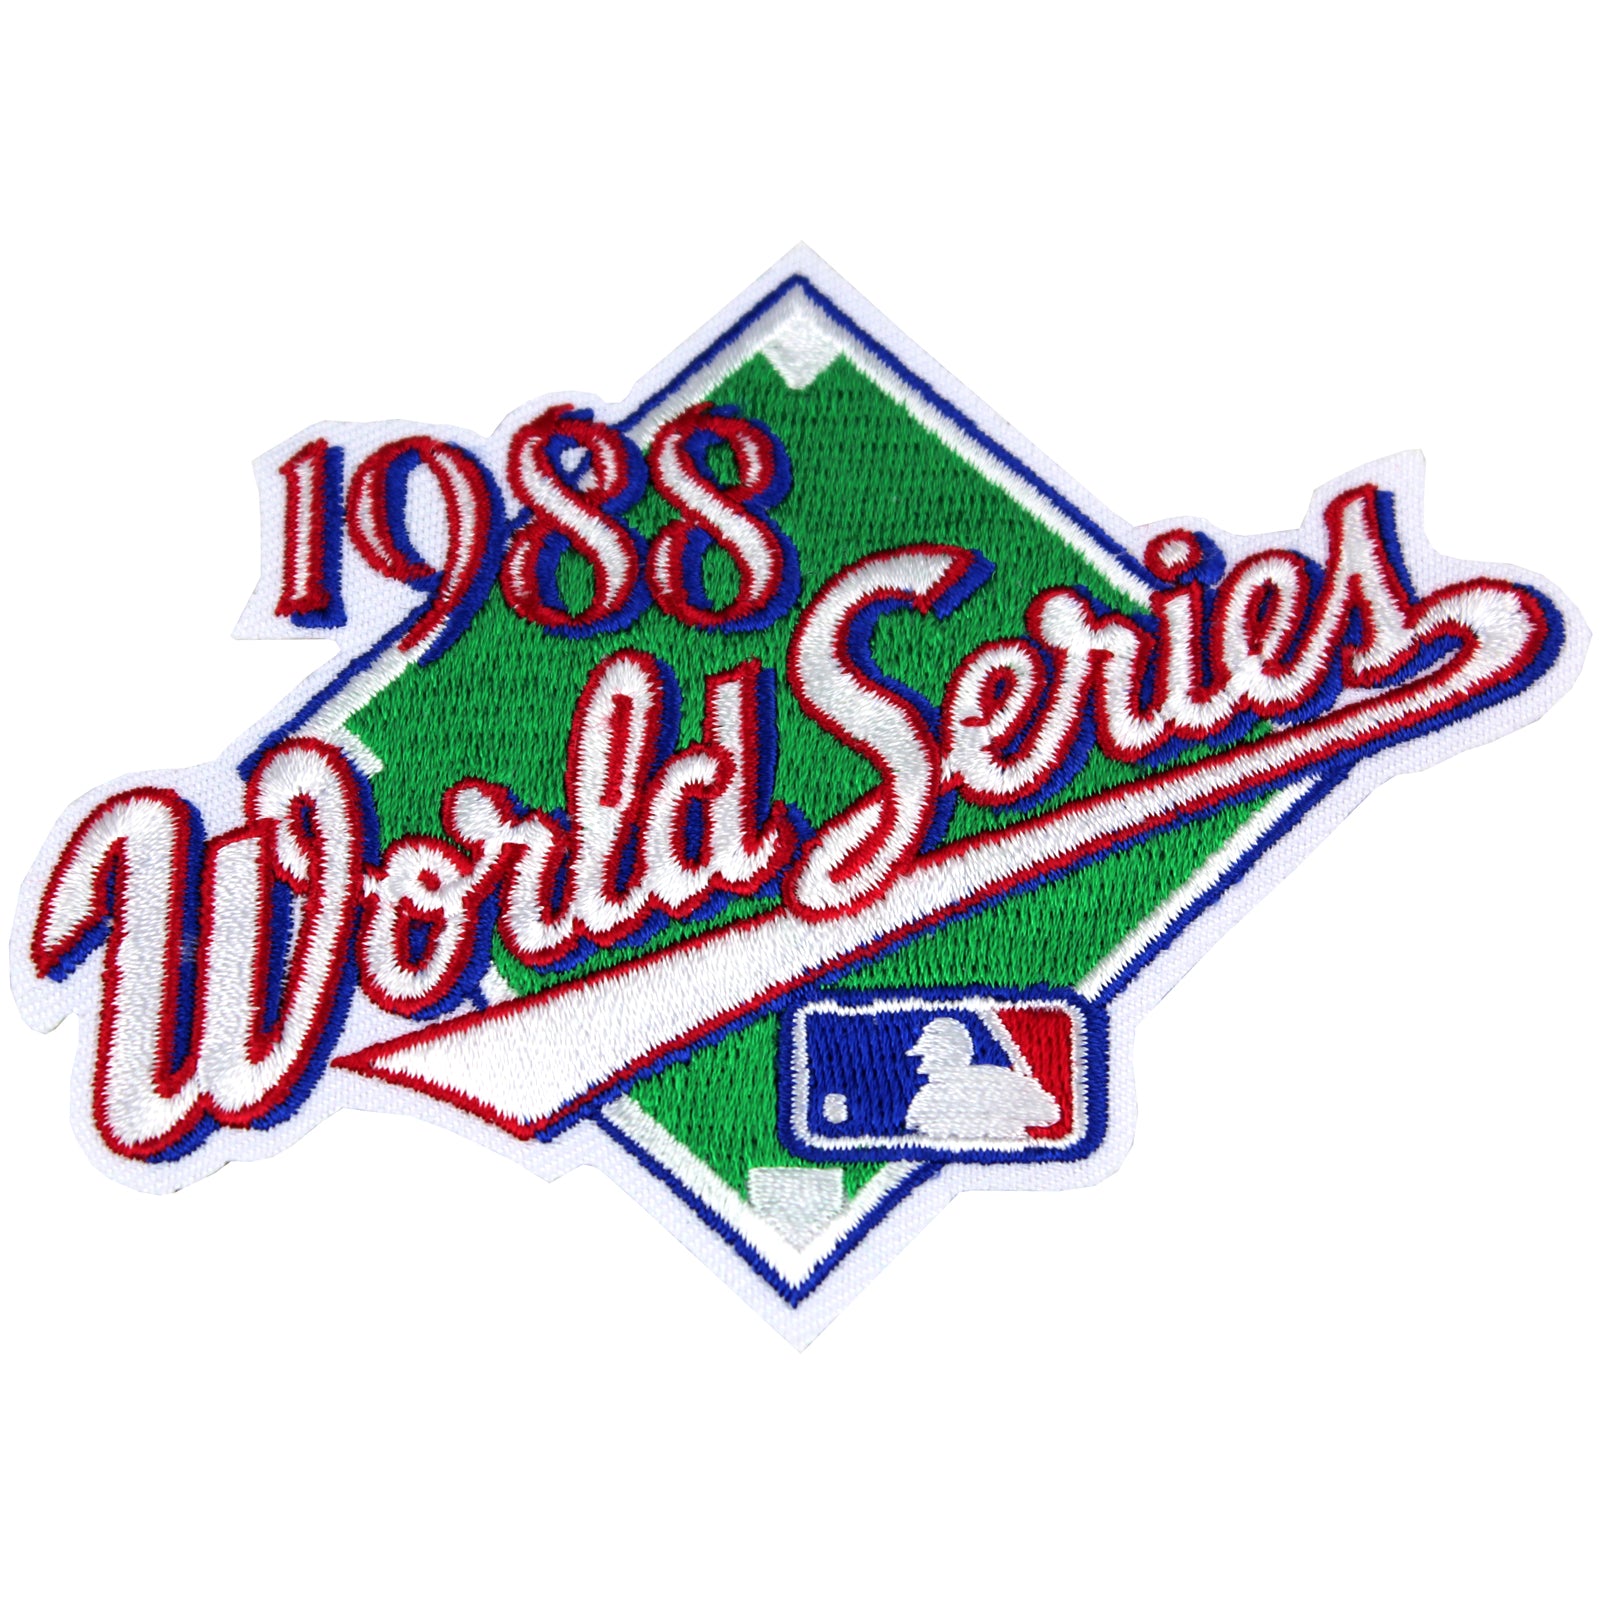 1988 World Series OML Baseball — Crave the Auto